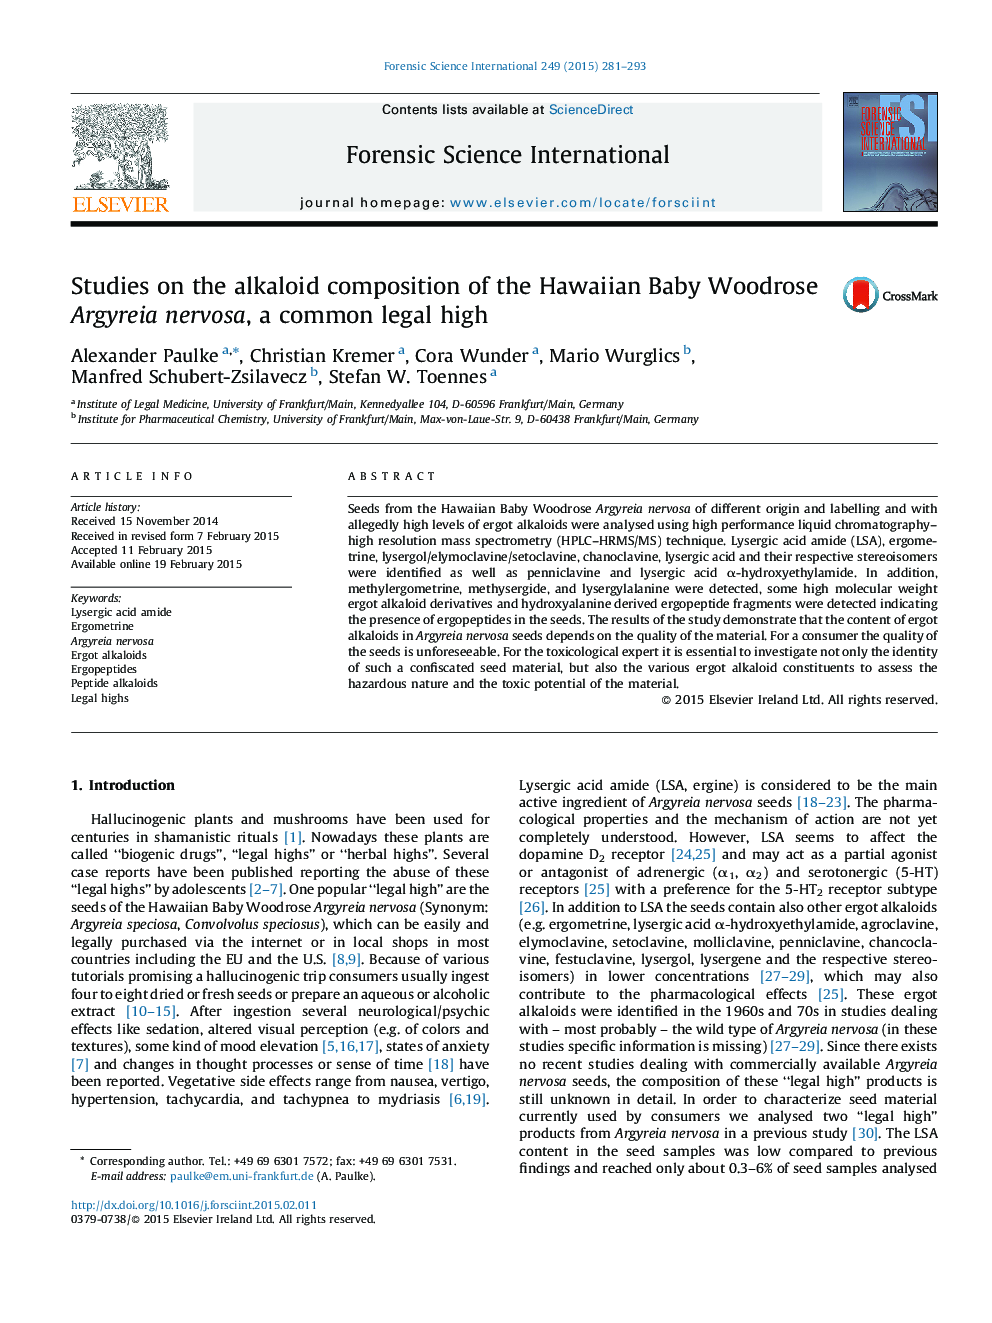 Studies on the alkaloid composition of the Hawaiian Baby Woodrose Argyreia nervosa, a common legal high